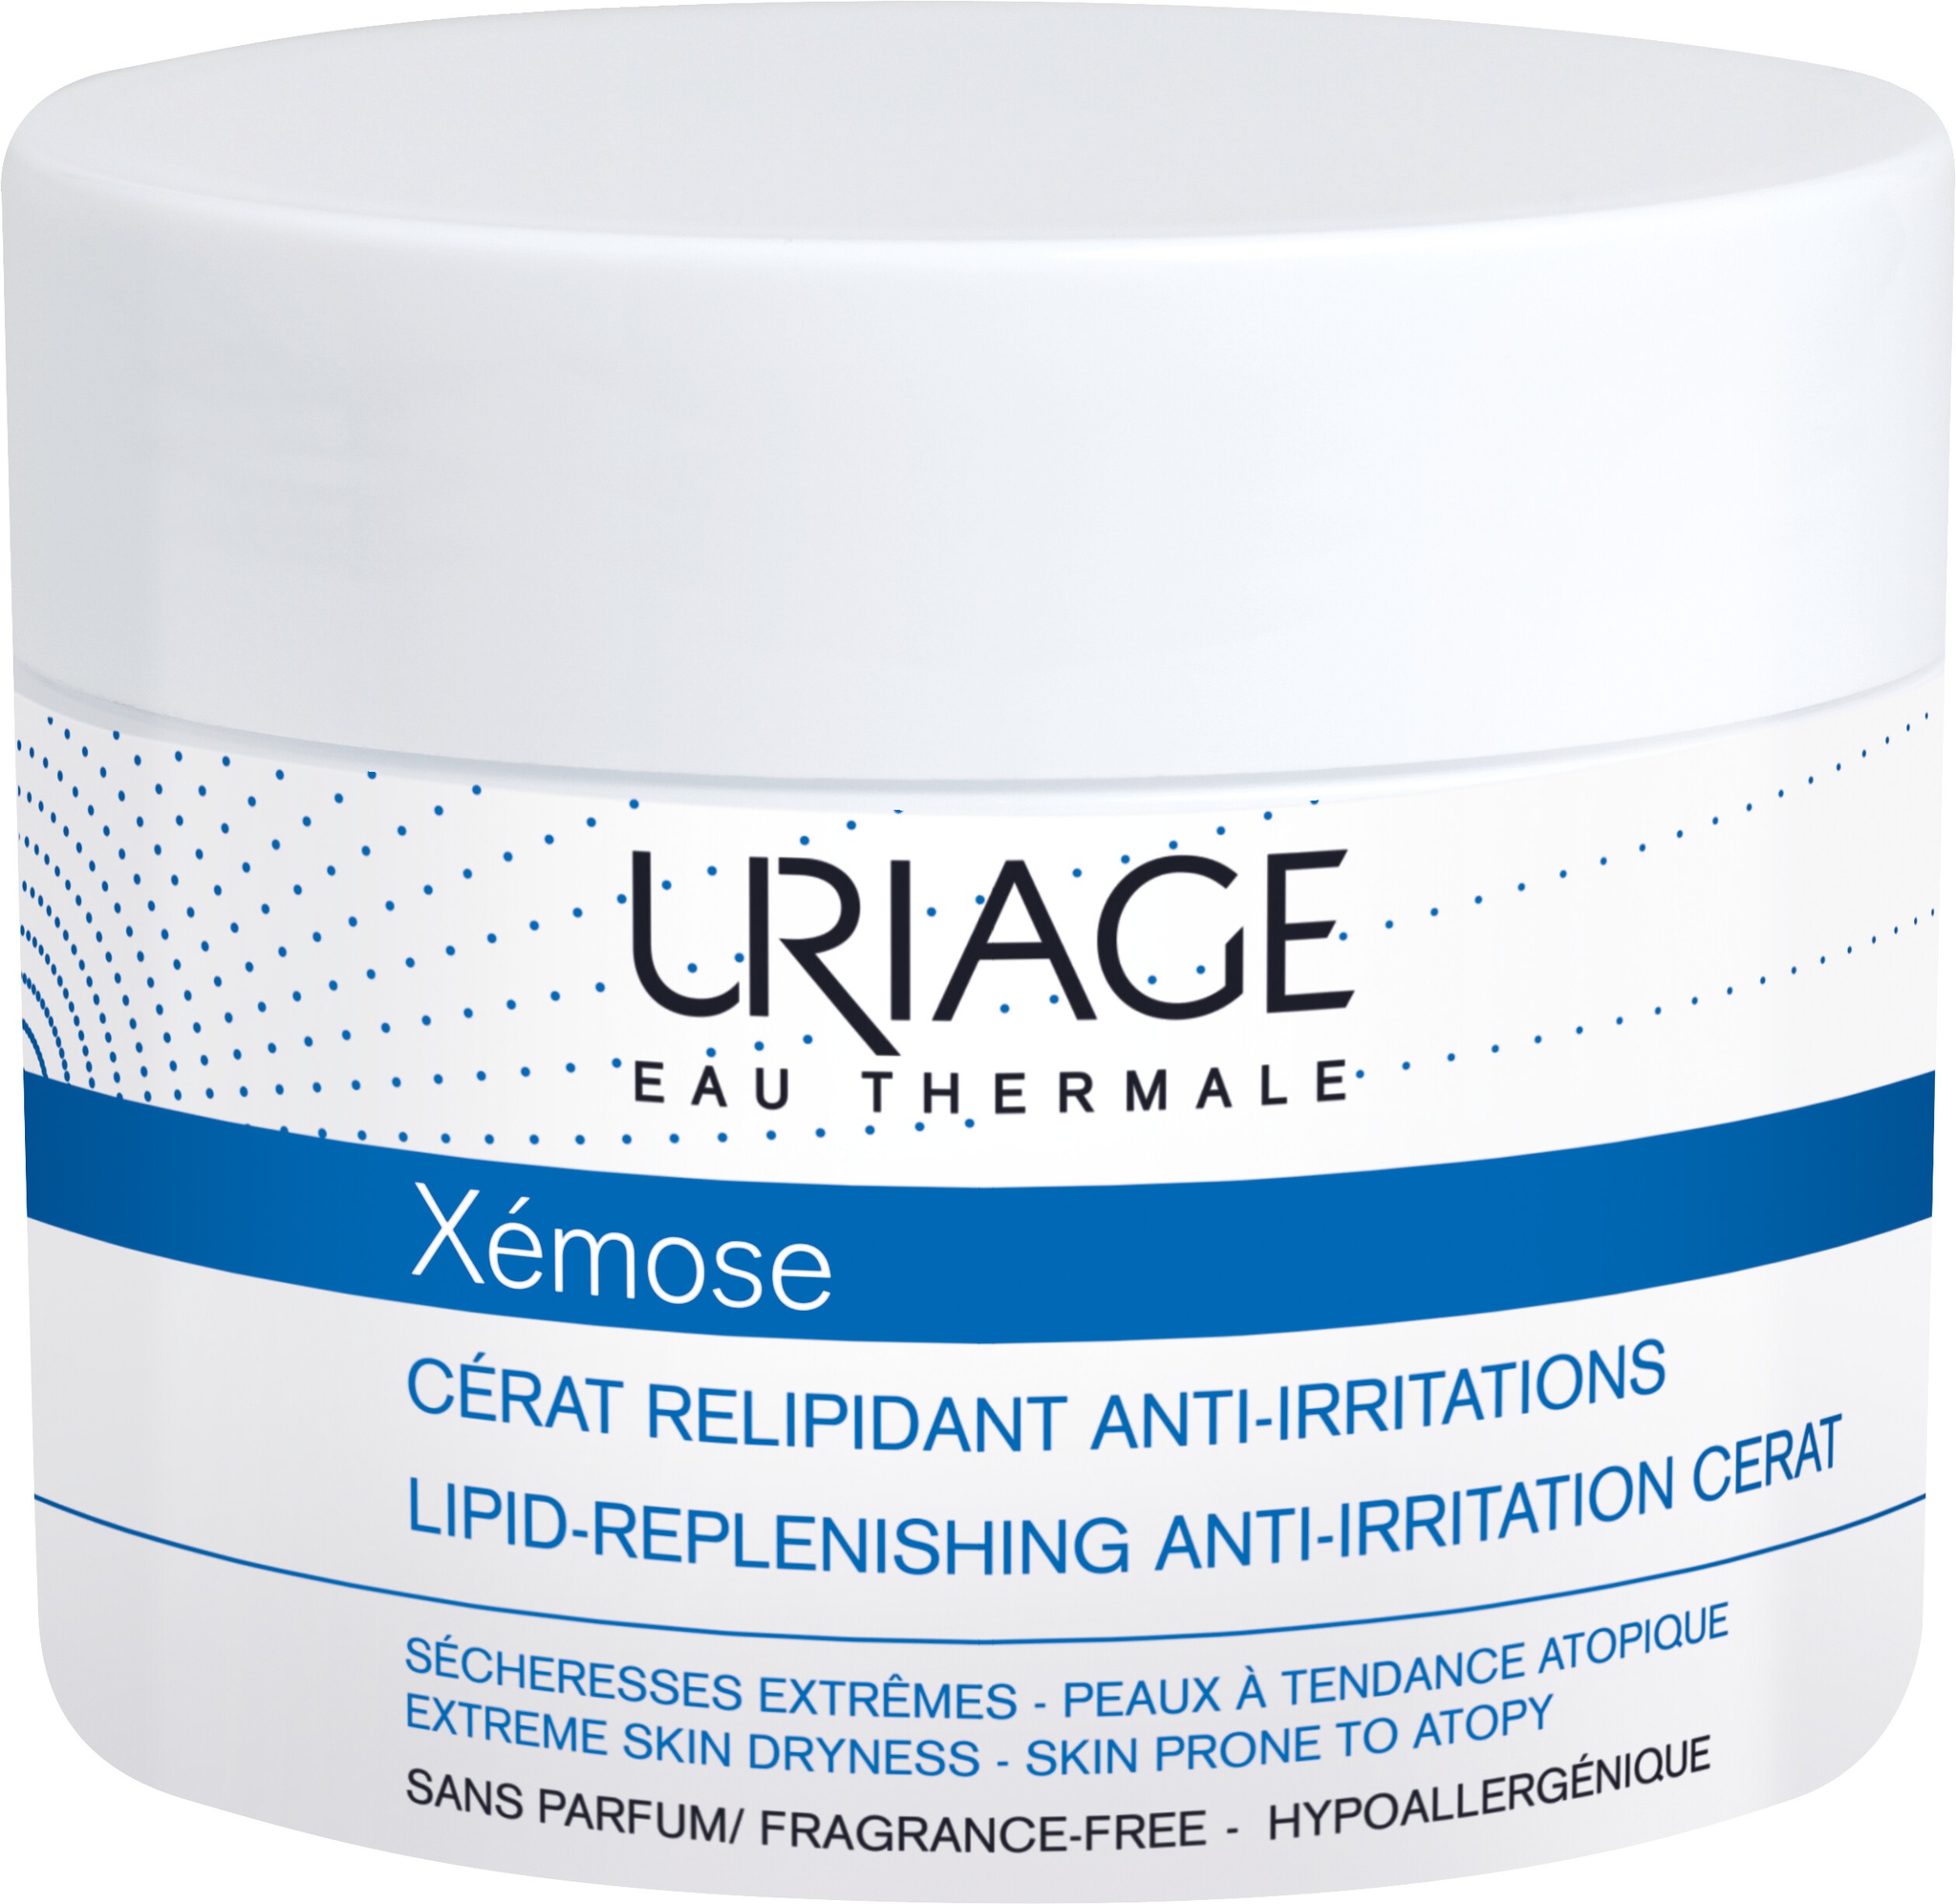 Uriage Xémose Lipid-repleneshing Anti-irritation Cerat